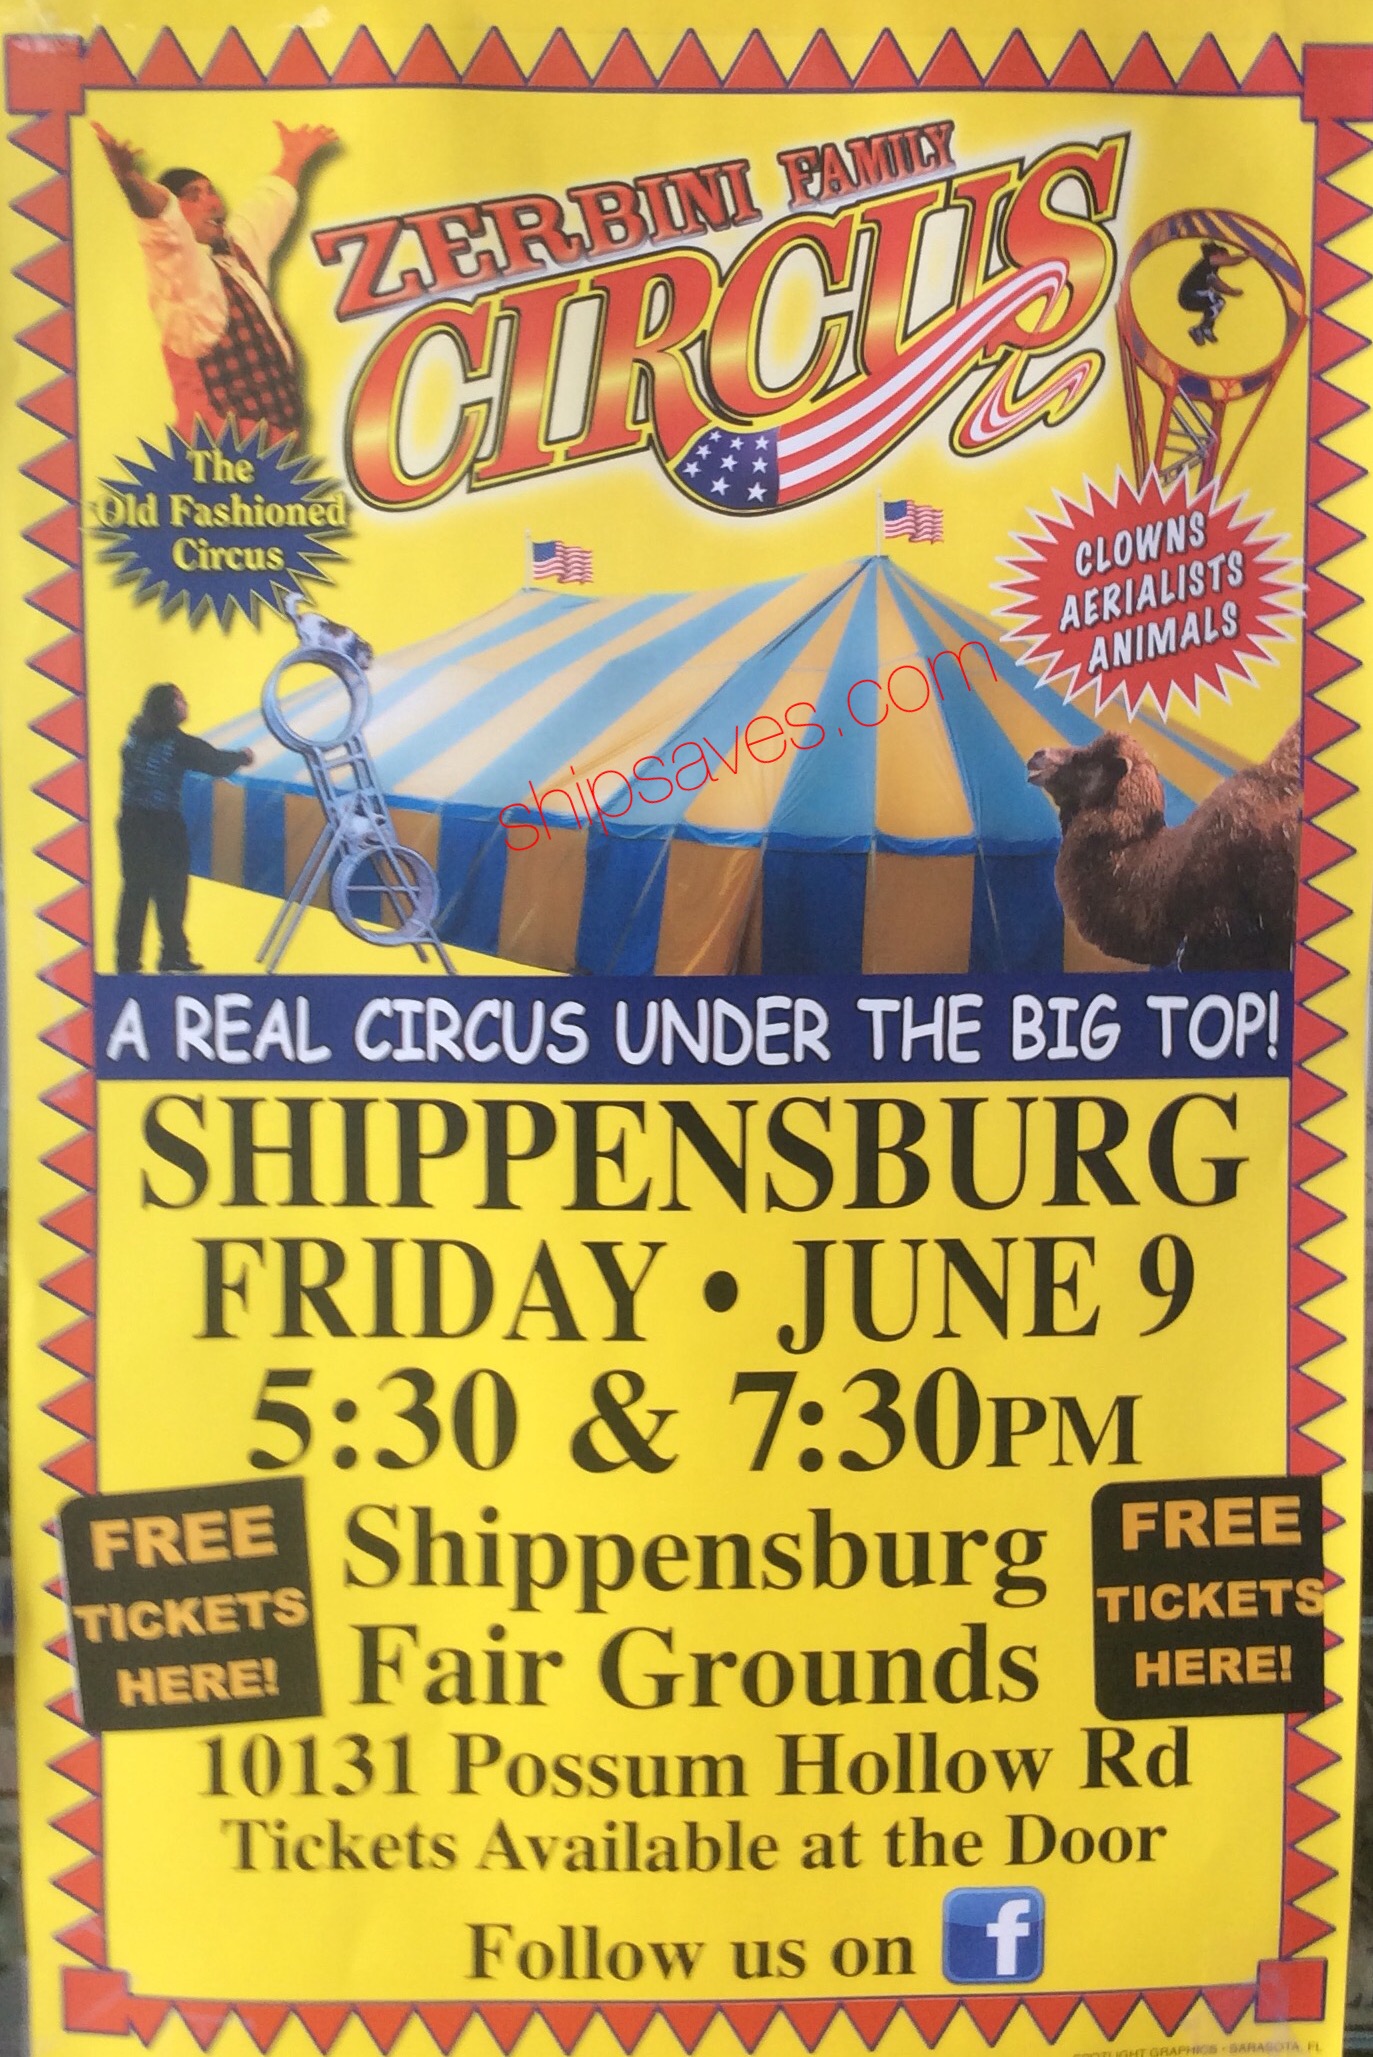 Zerbini Family Circus is coming to Shippensburg & Chambersburg - SHIP SAVES